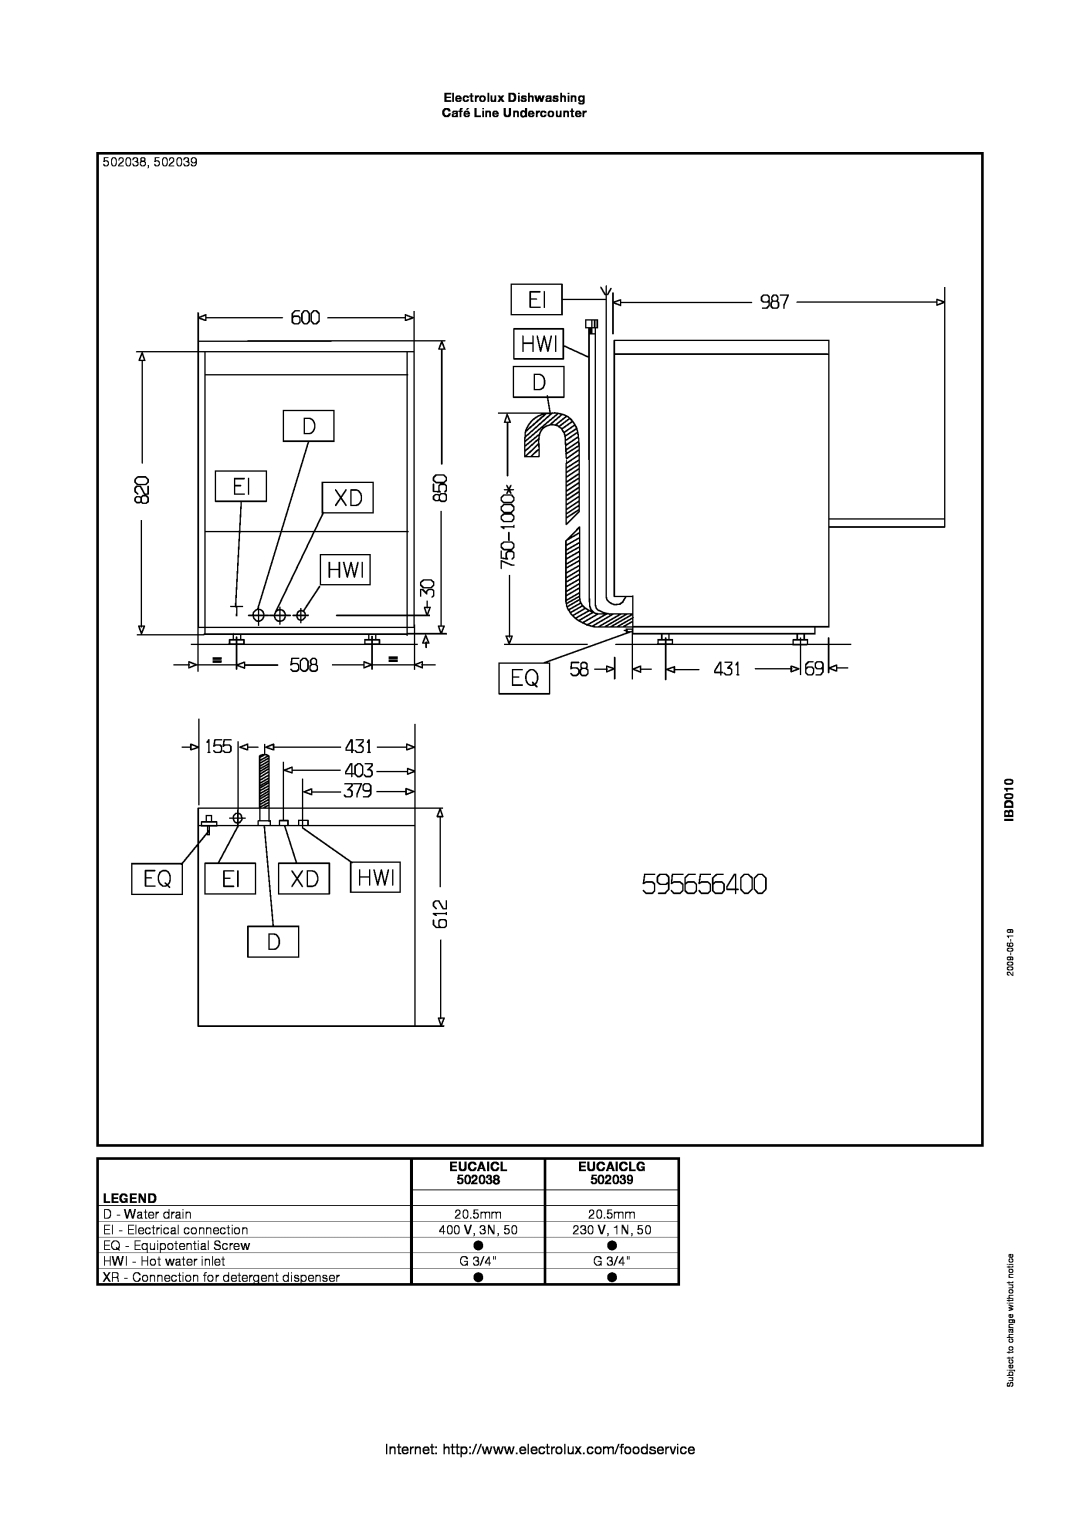 Electrolux 502038, EUCAICLG manual Electrolux Dishwashing, Café Line Undercounter, IBD010, Eucaiclg, 502039, 2009-06-19 